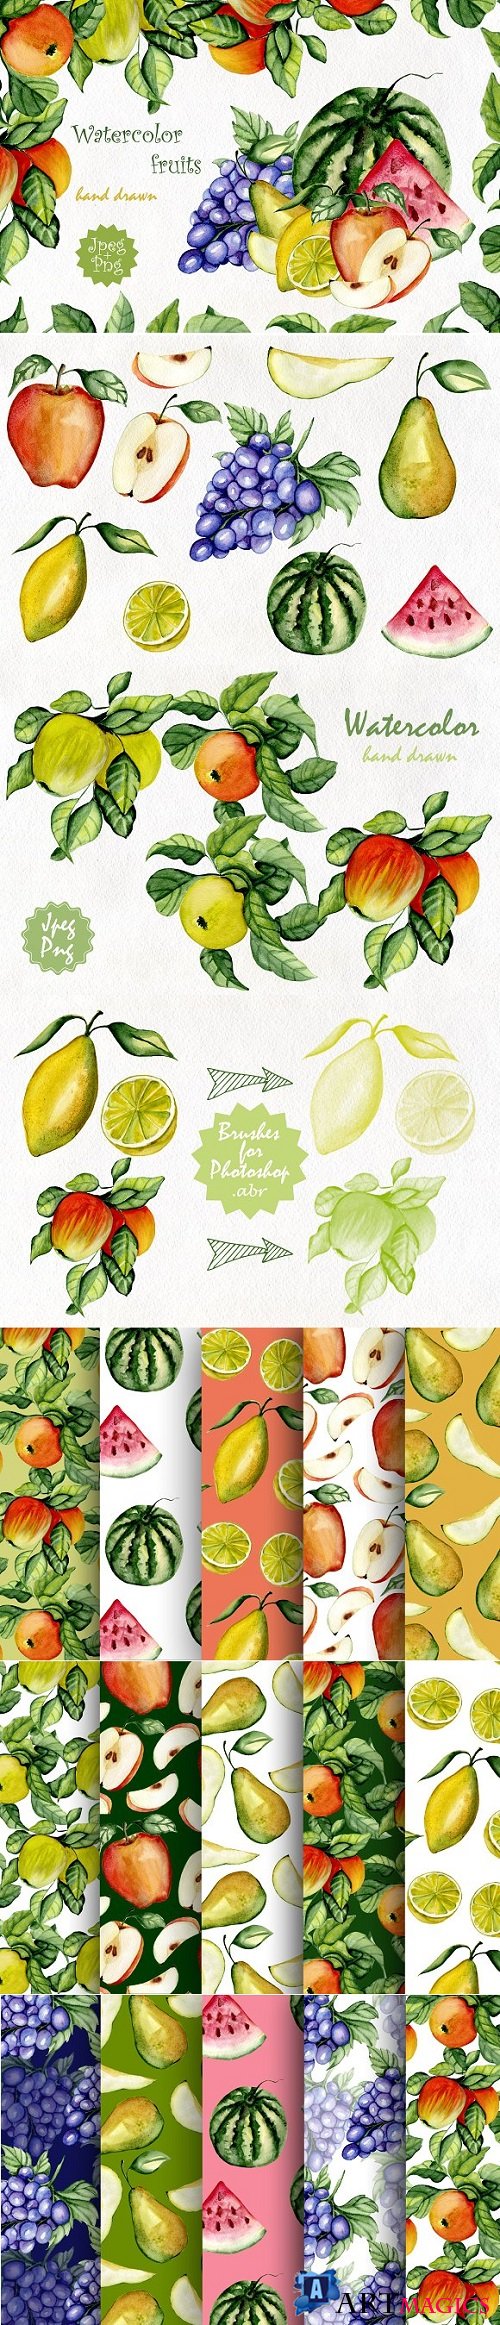 Watercolor fruits - 542760